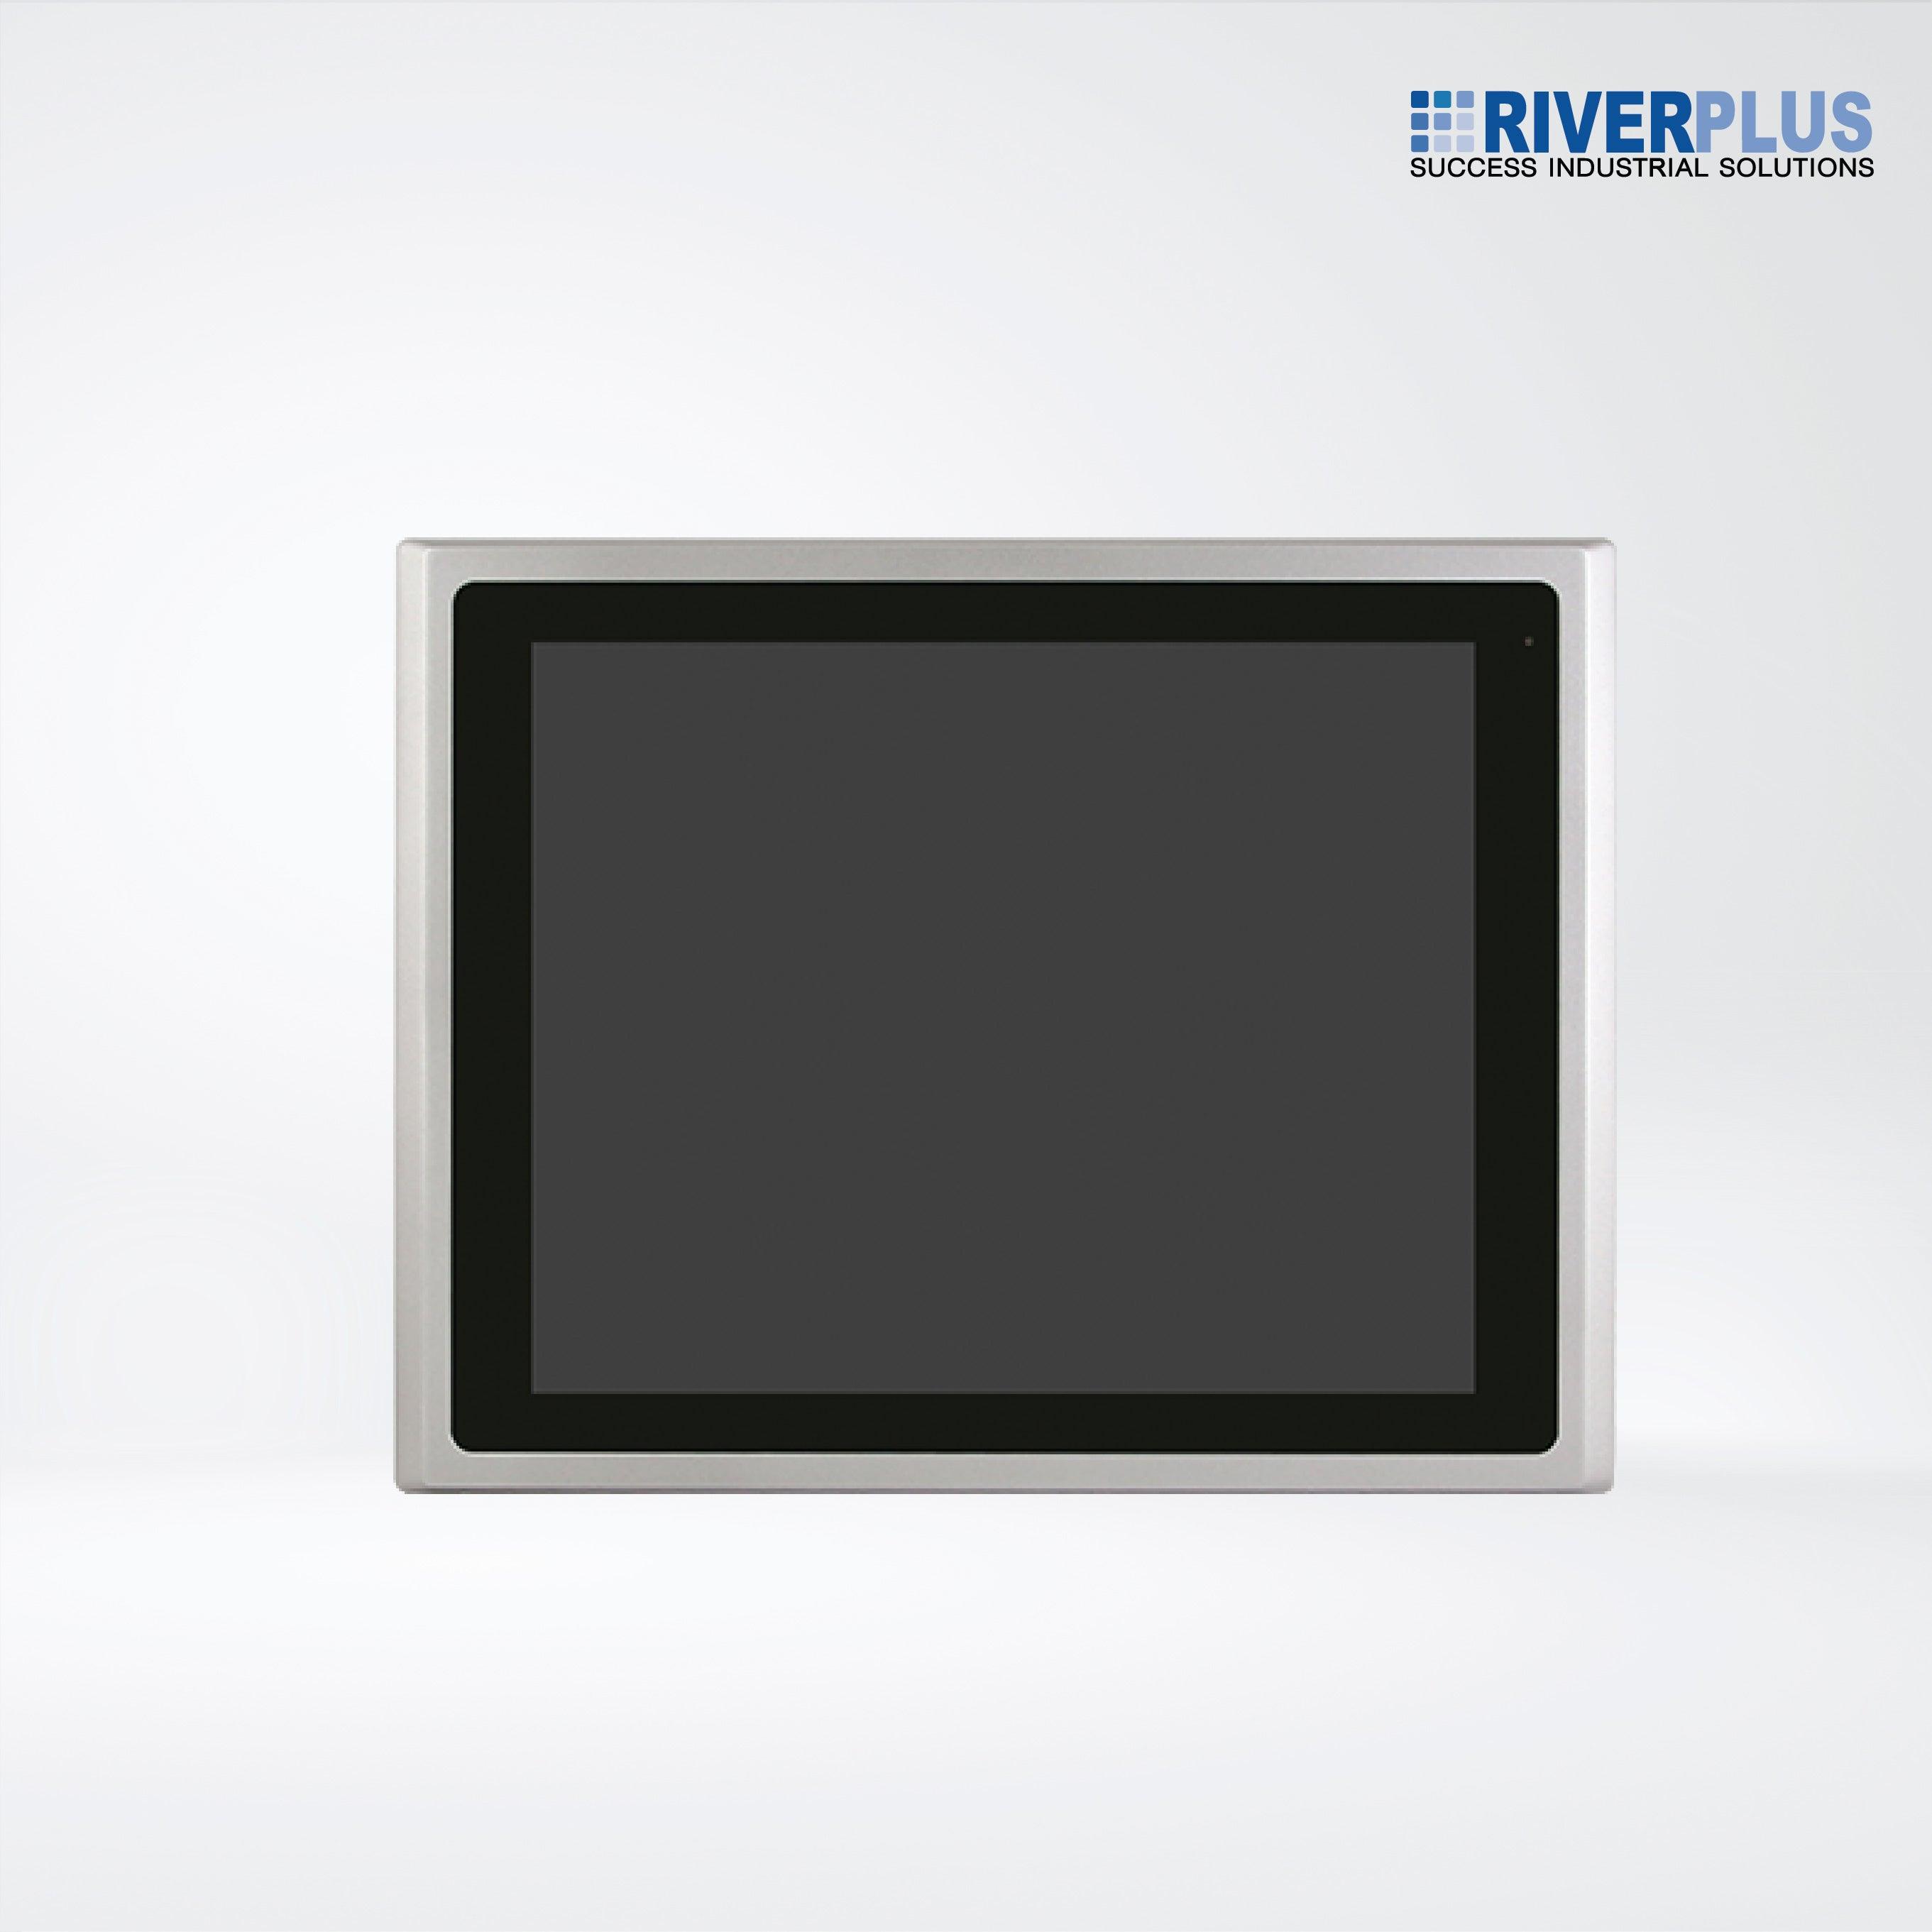 ViPAC-917GH 17” Intel 6th/7th Core i3/i5/i7 Panel PC - Riverplus